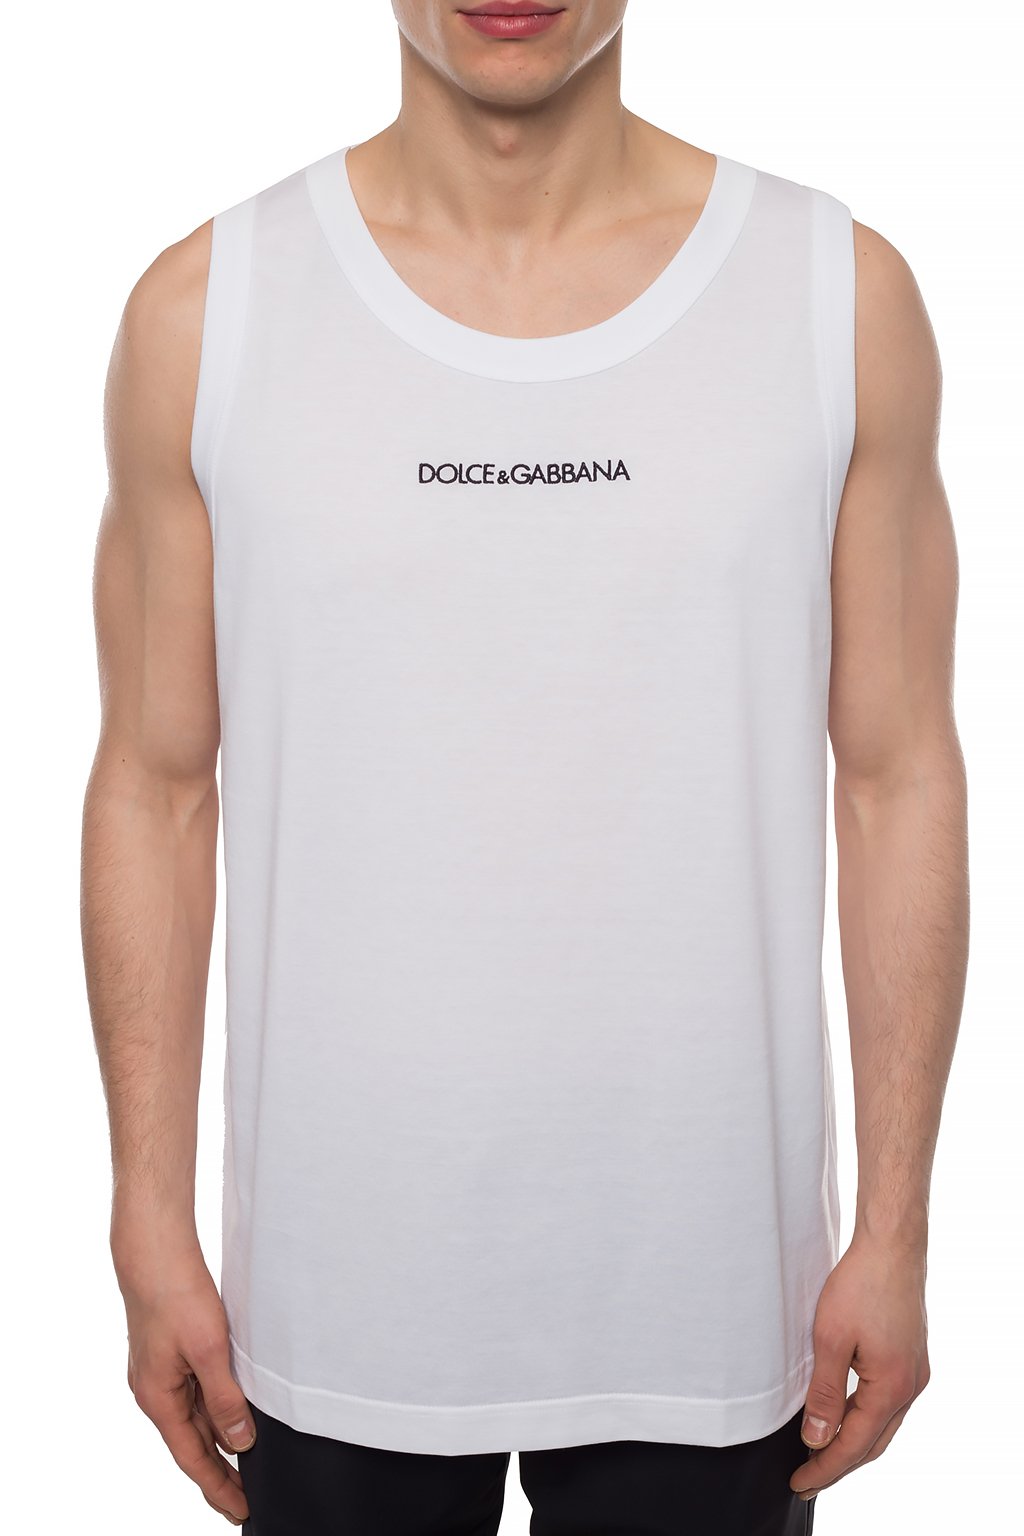 White Tank top with logo Dolce & Gabbana - Vitkac France